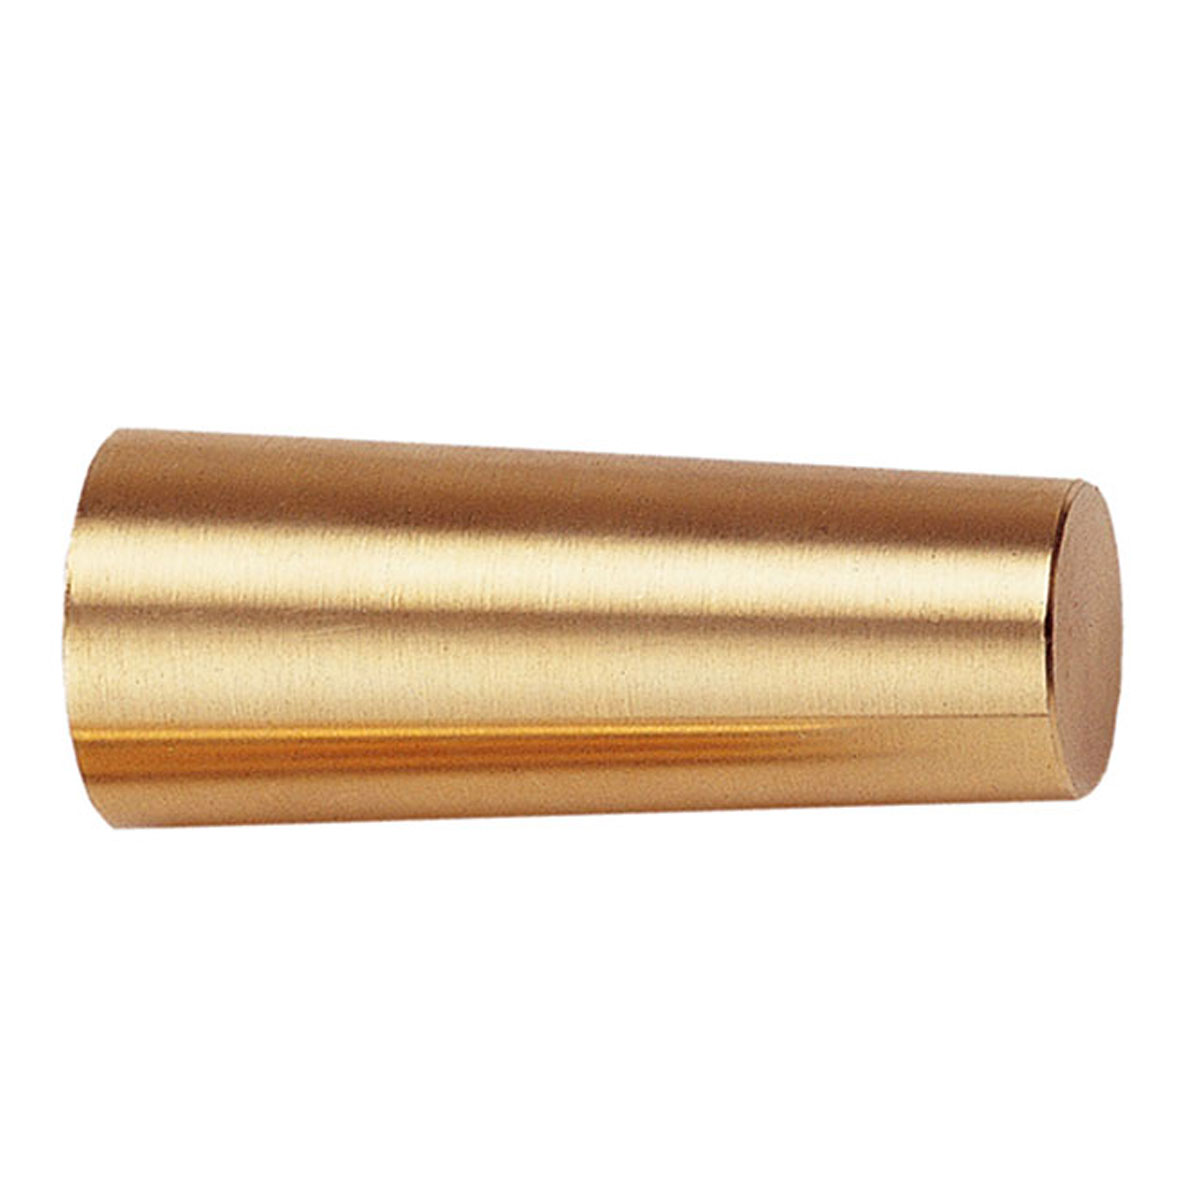 Brass Tube Plug For Tubes 22.2mm OD & BWG 15-22